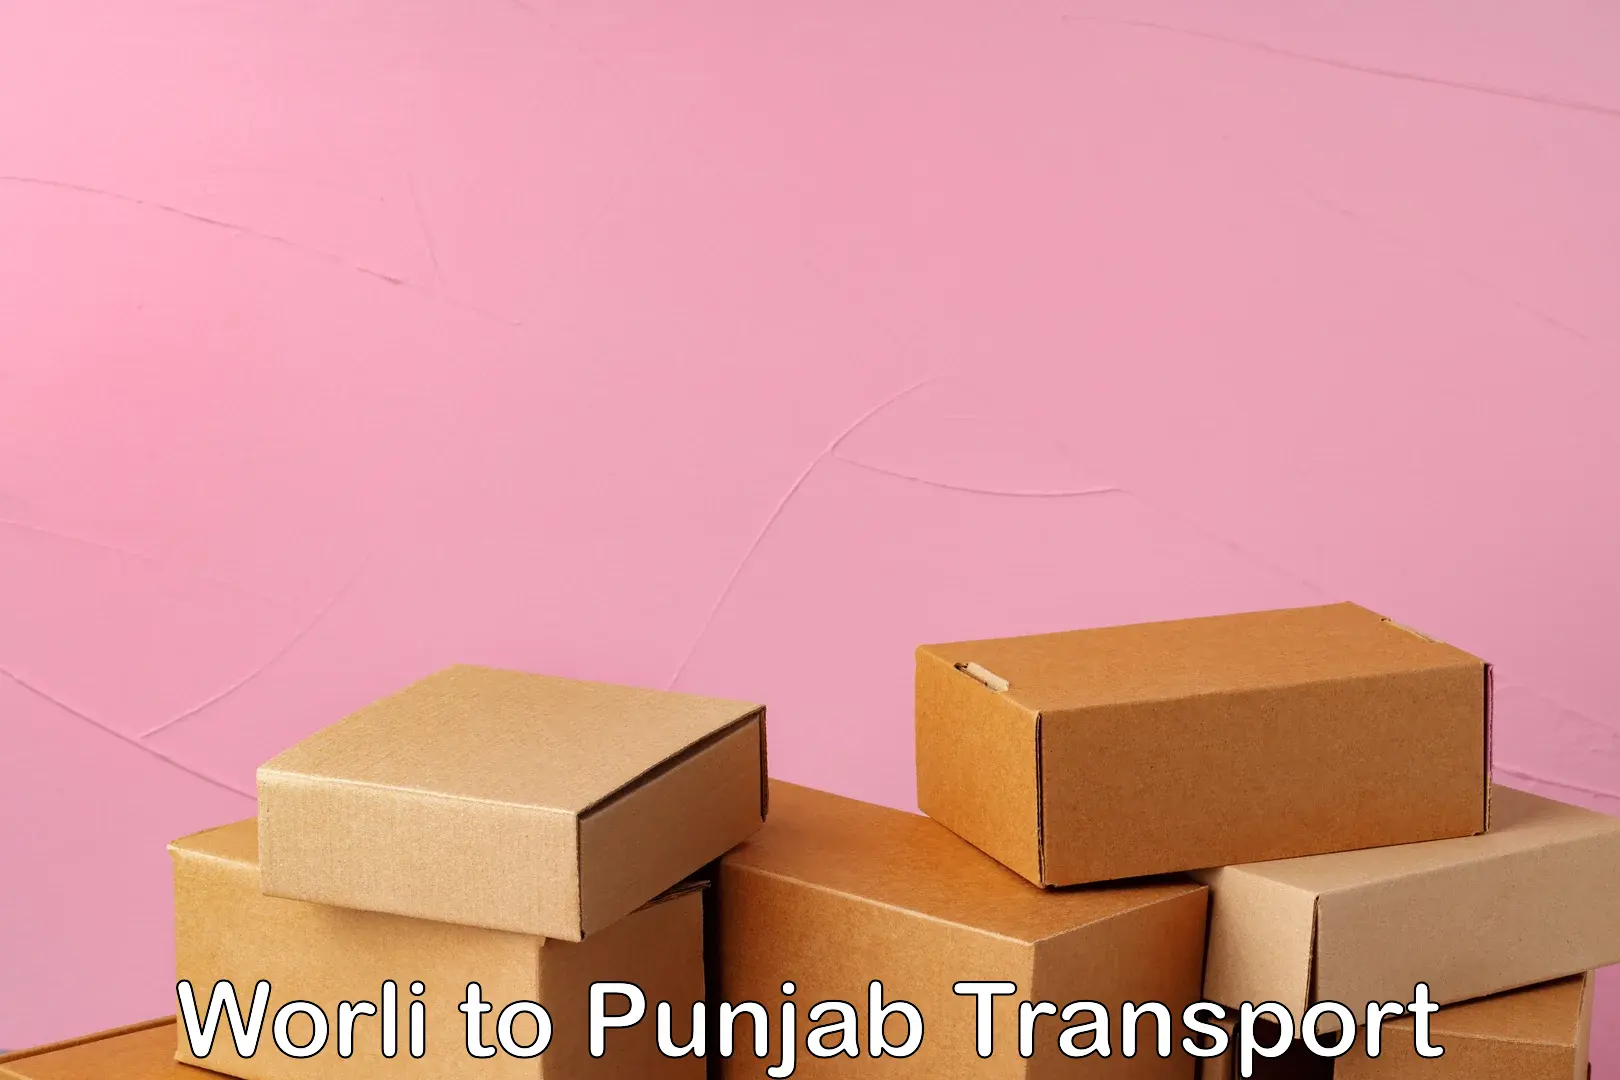 Commercial transport service Worli to Punjab